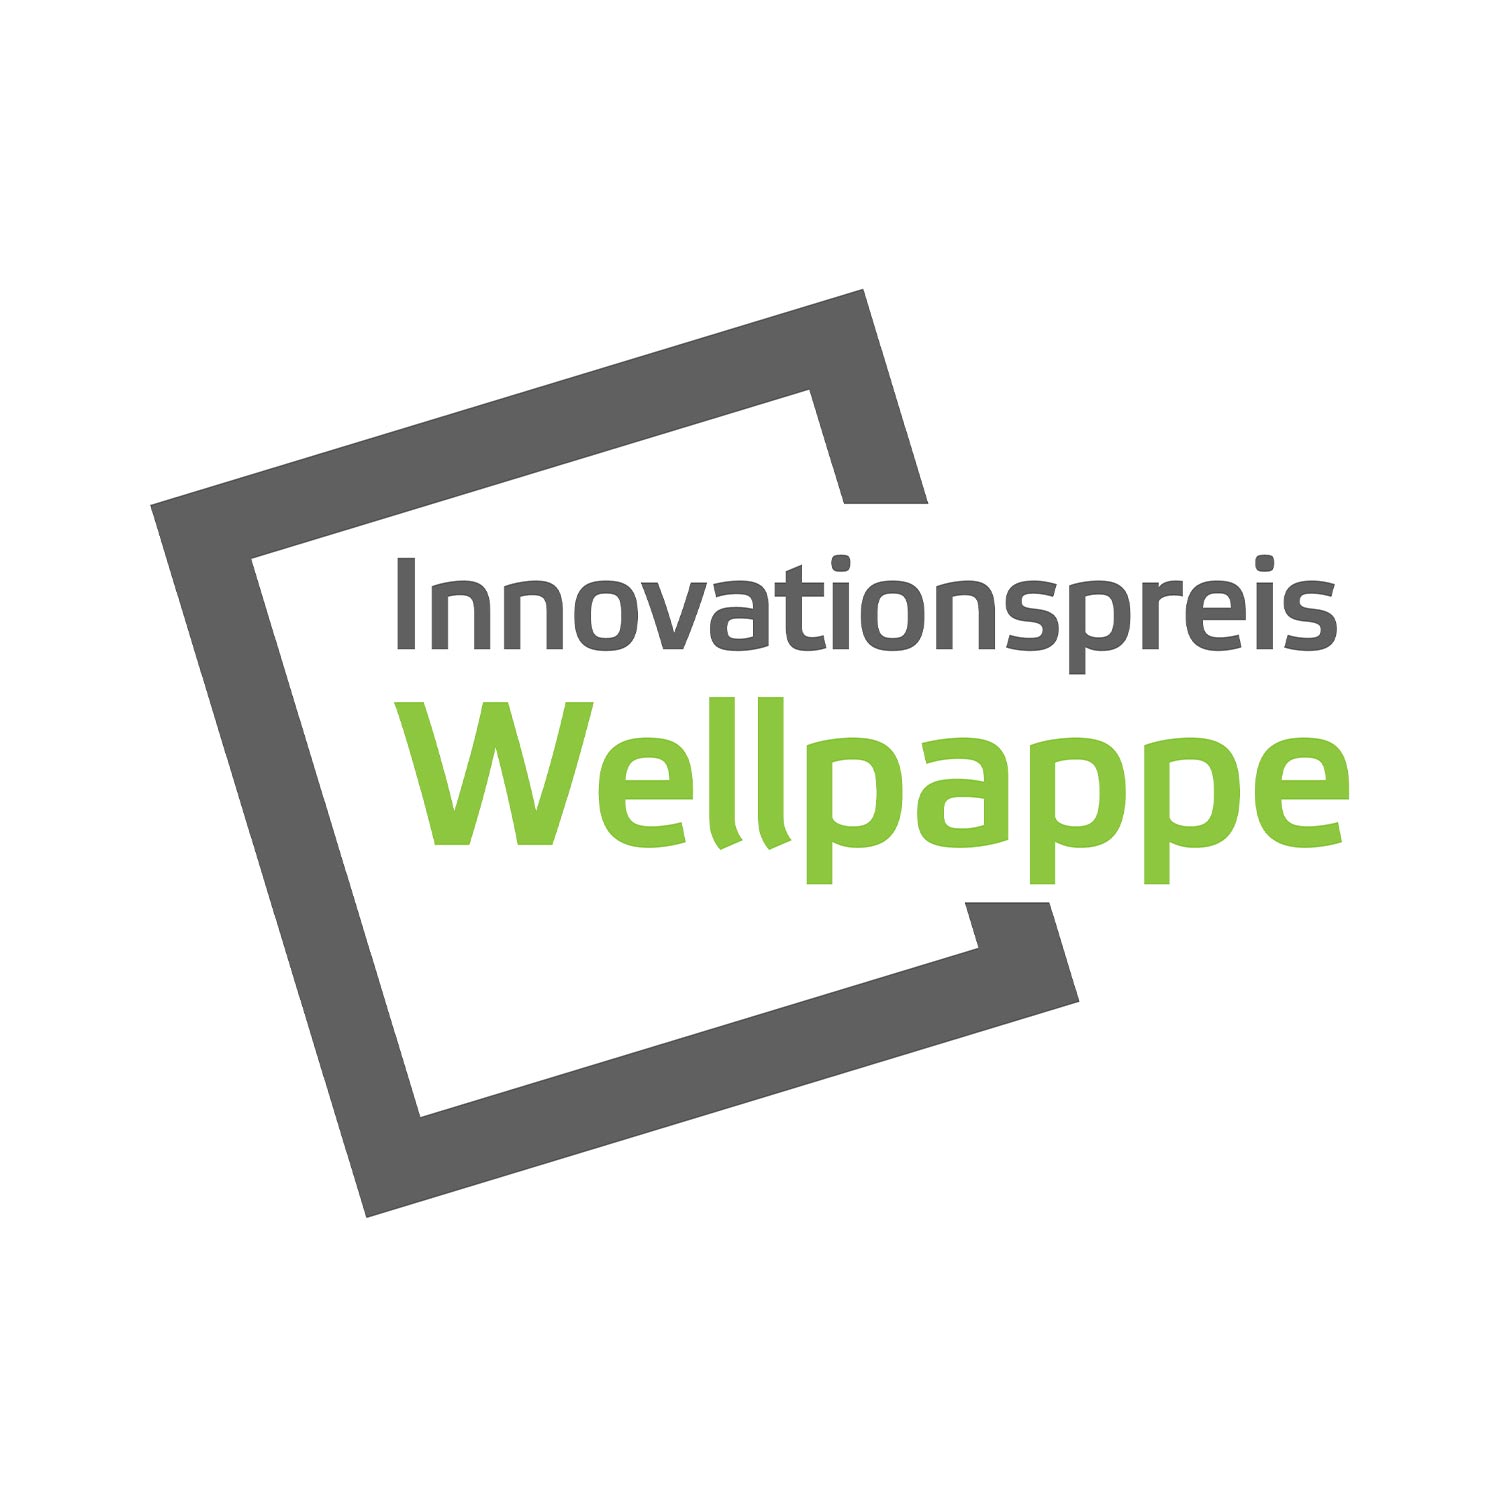 Innovationspreis Wellpappe